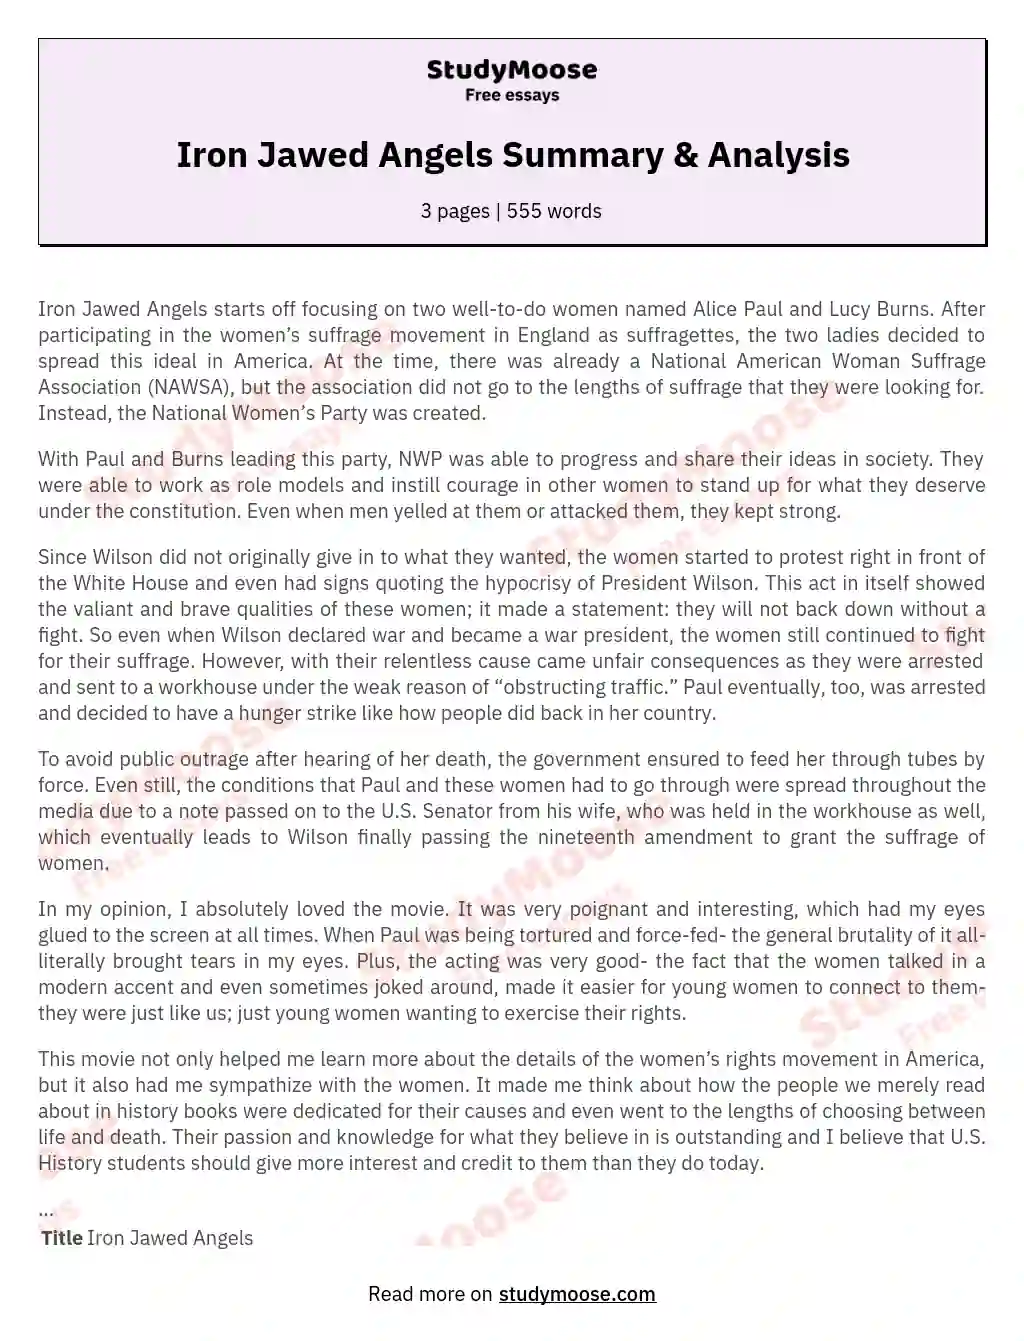 Iron Jawed Angels Summary & Analysis essay